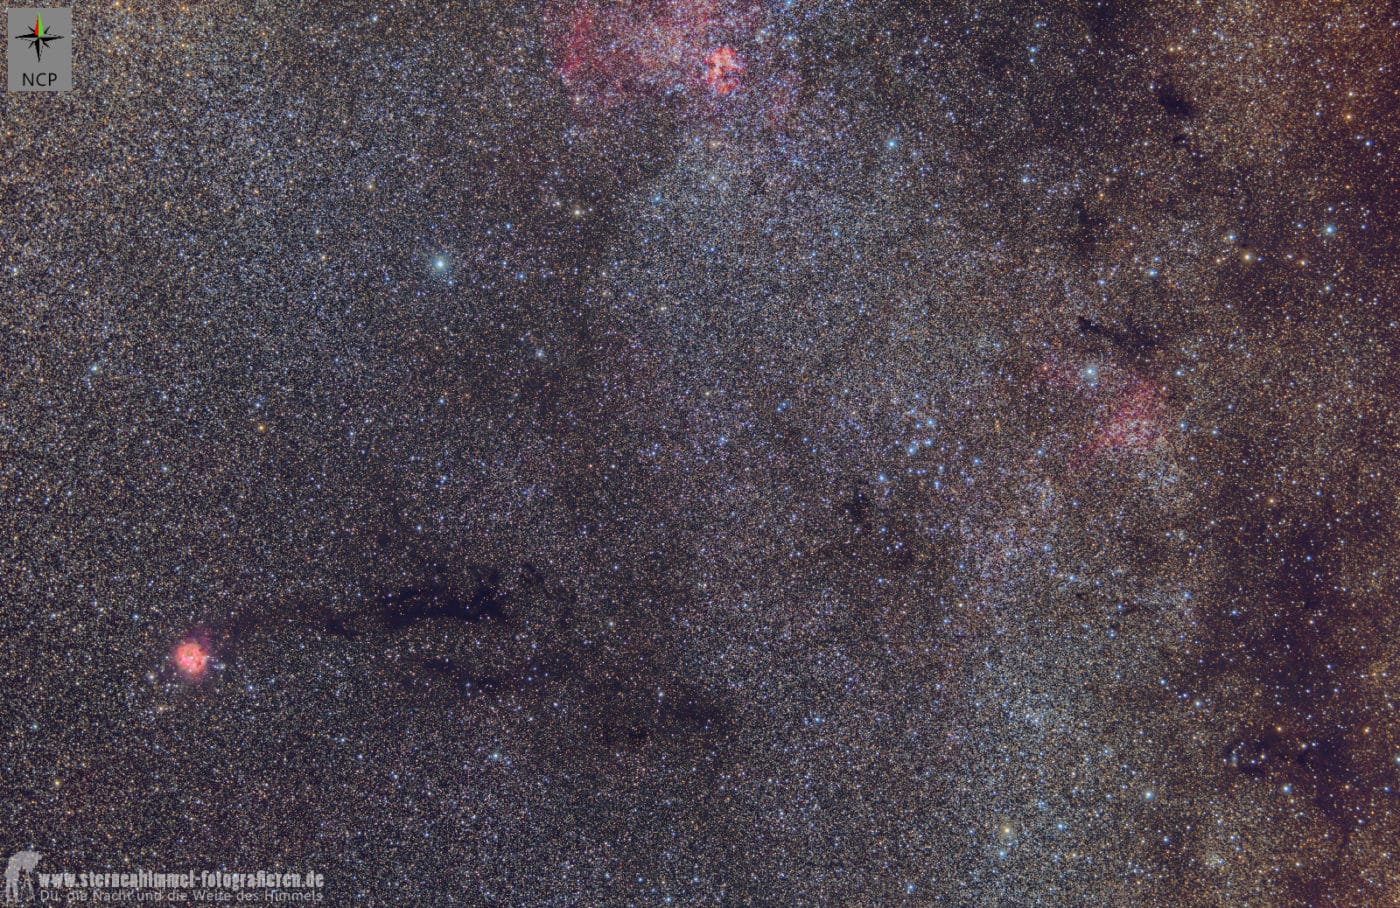 Kokon-Nebel, Cocoon-Nebula, 274 mm, Widefield, B168, M34, Cygnus